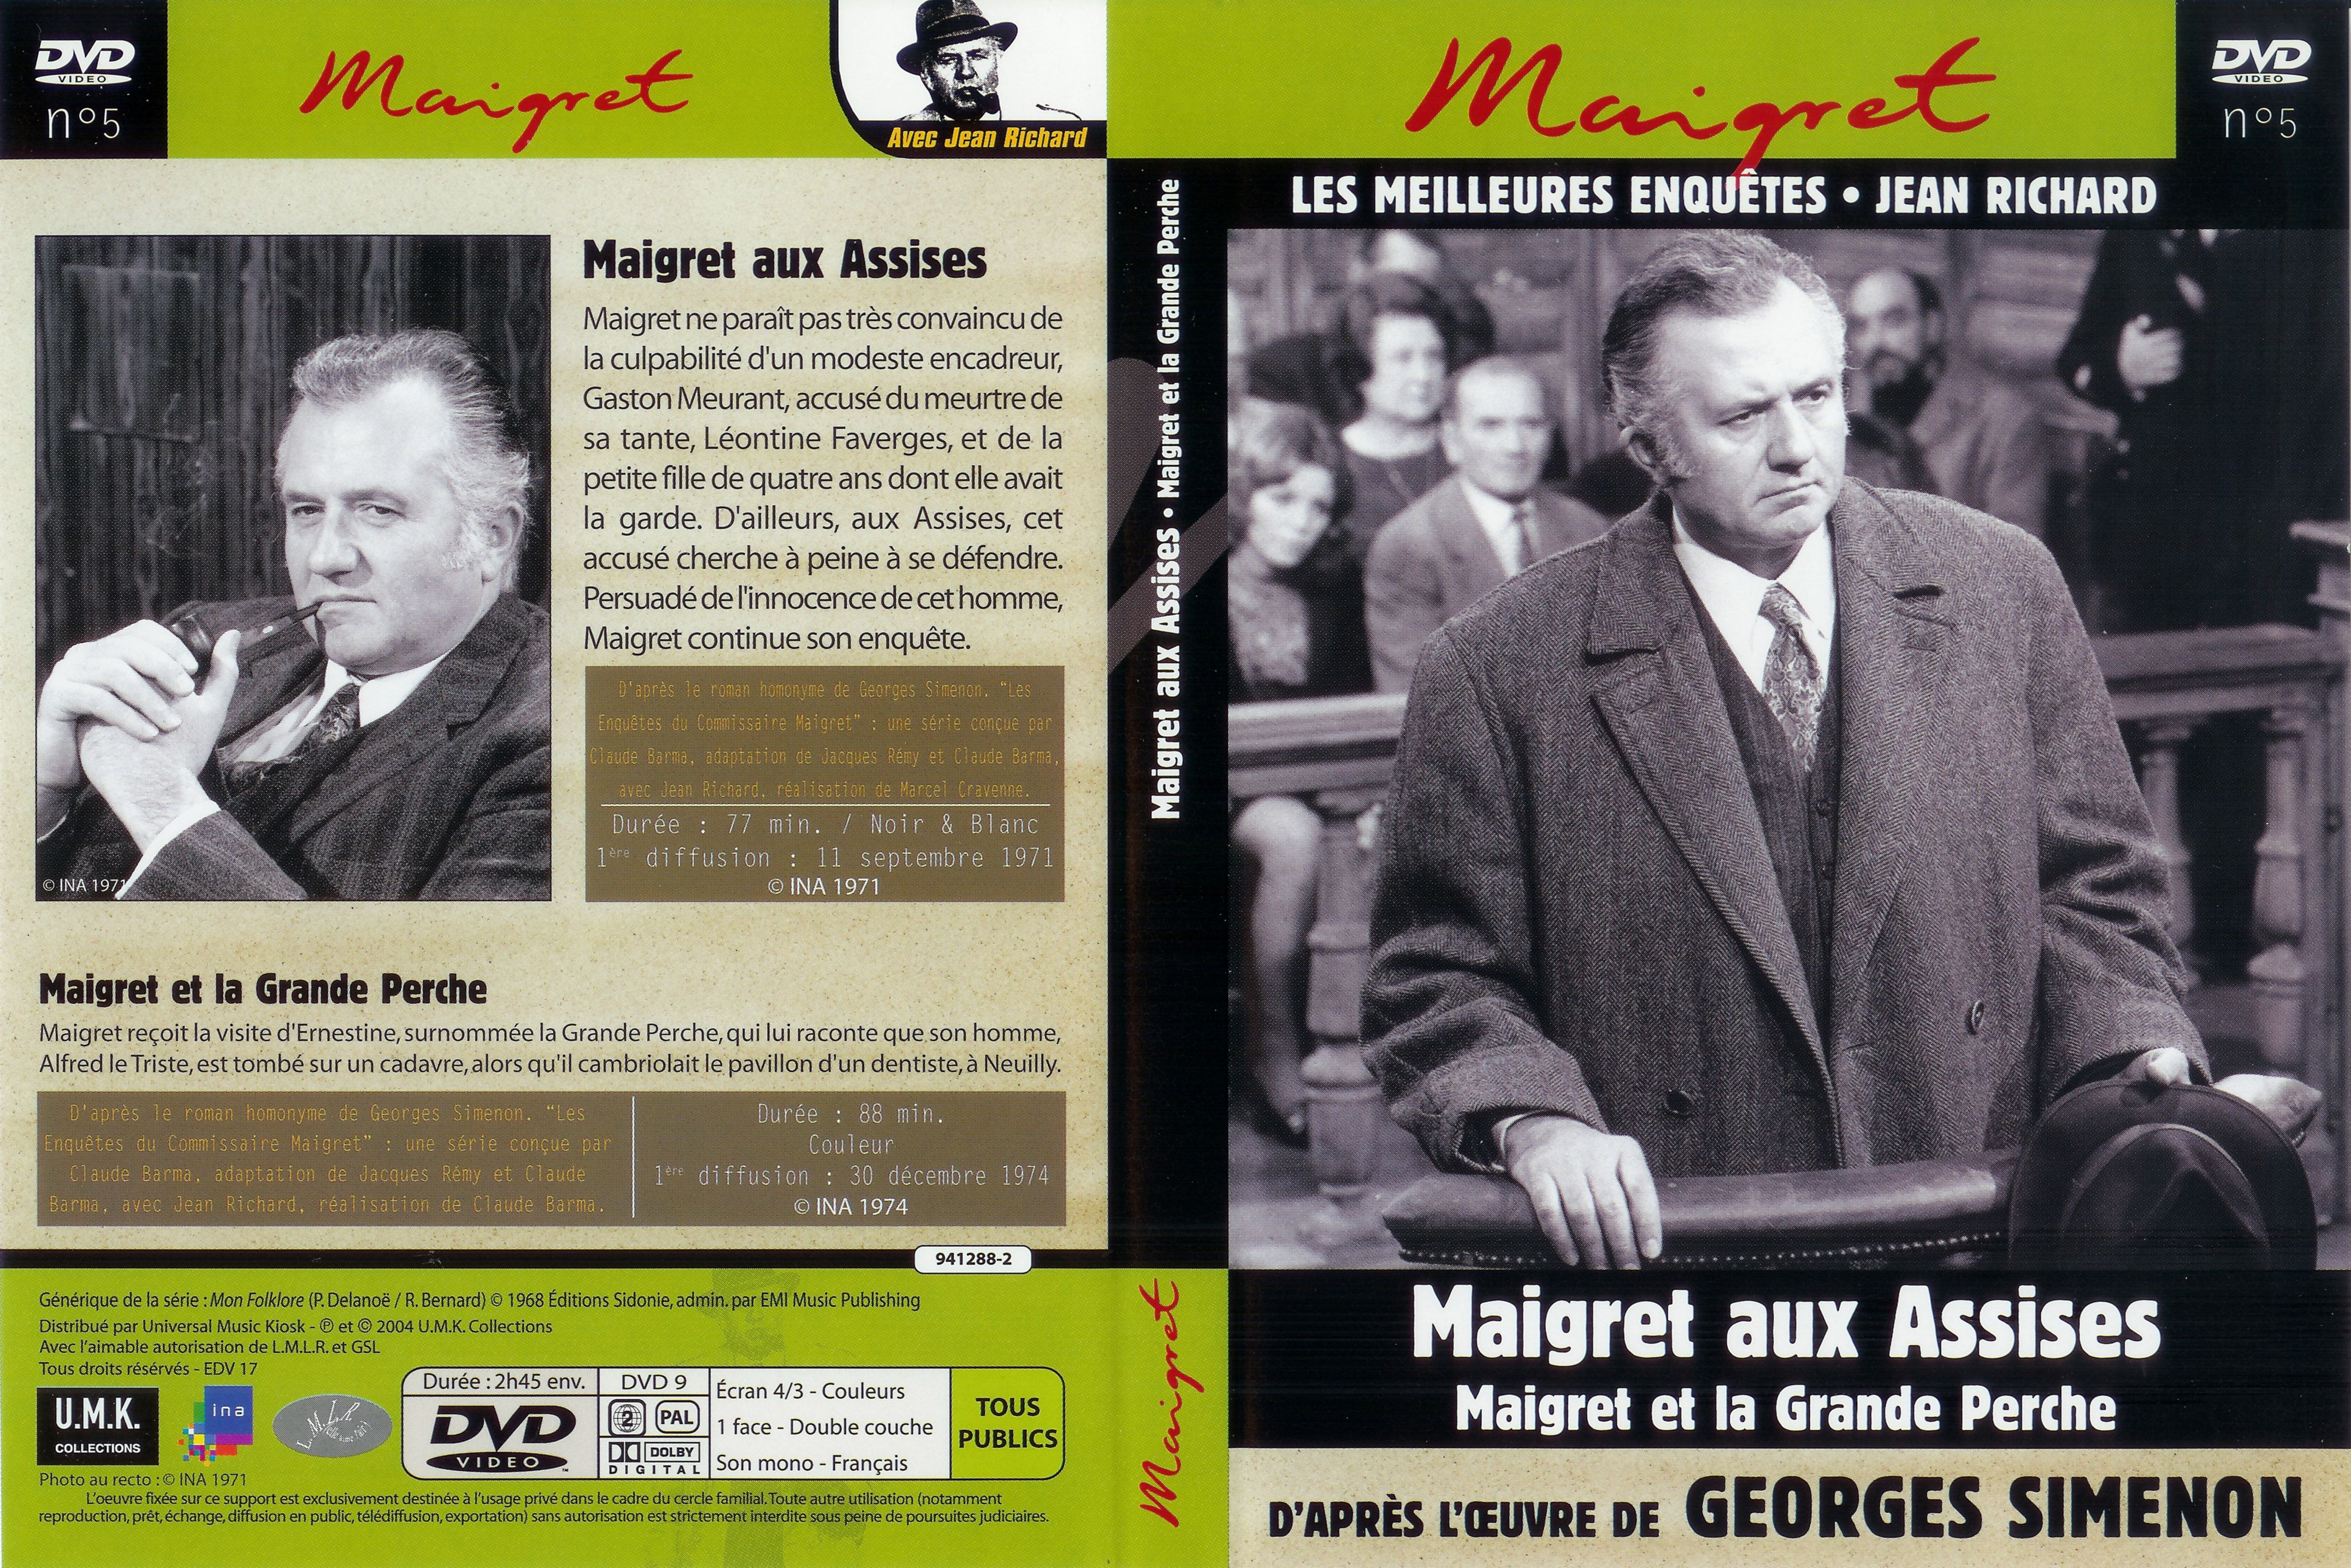 Jaquette DVD Maigret (Jean Richard) vol 05